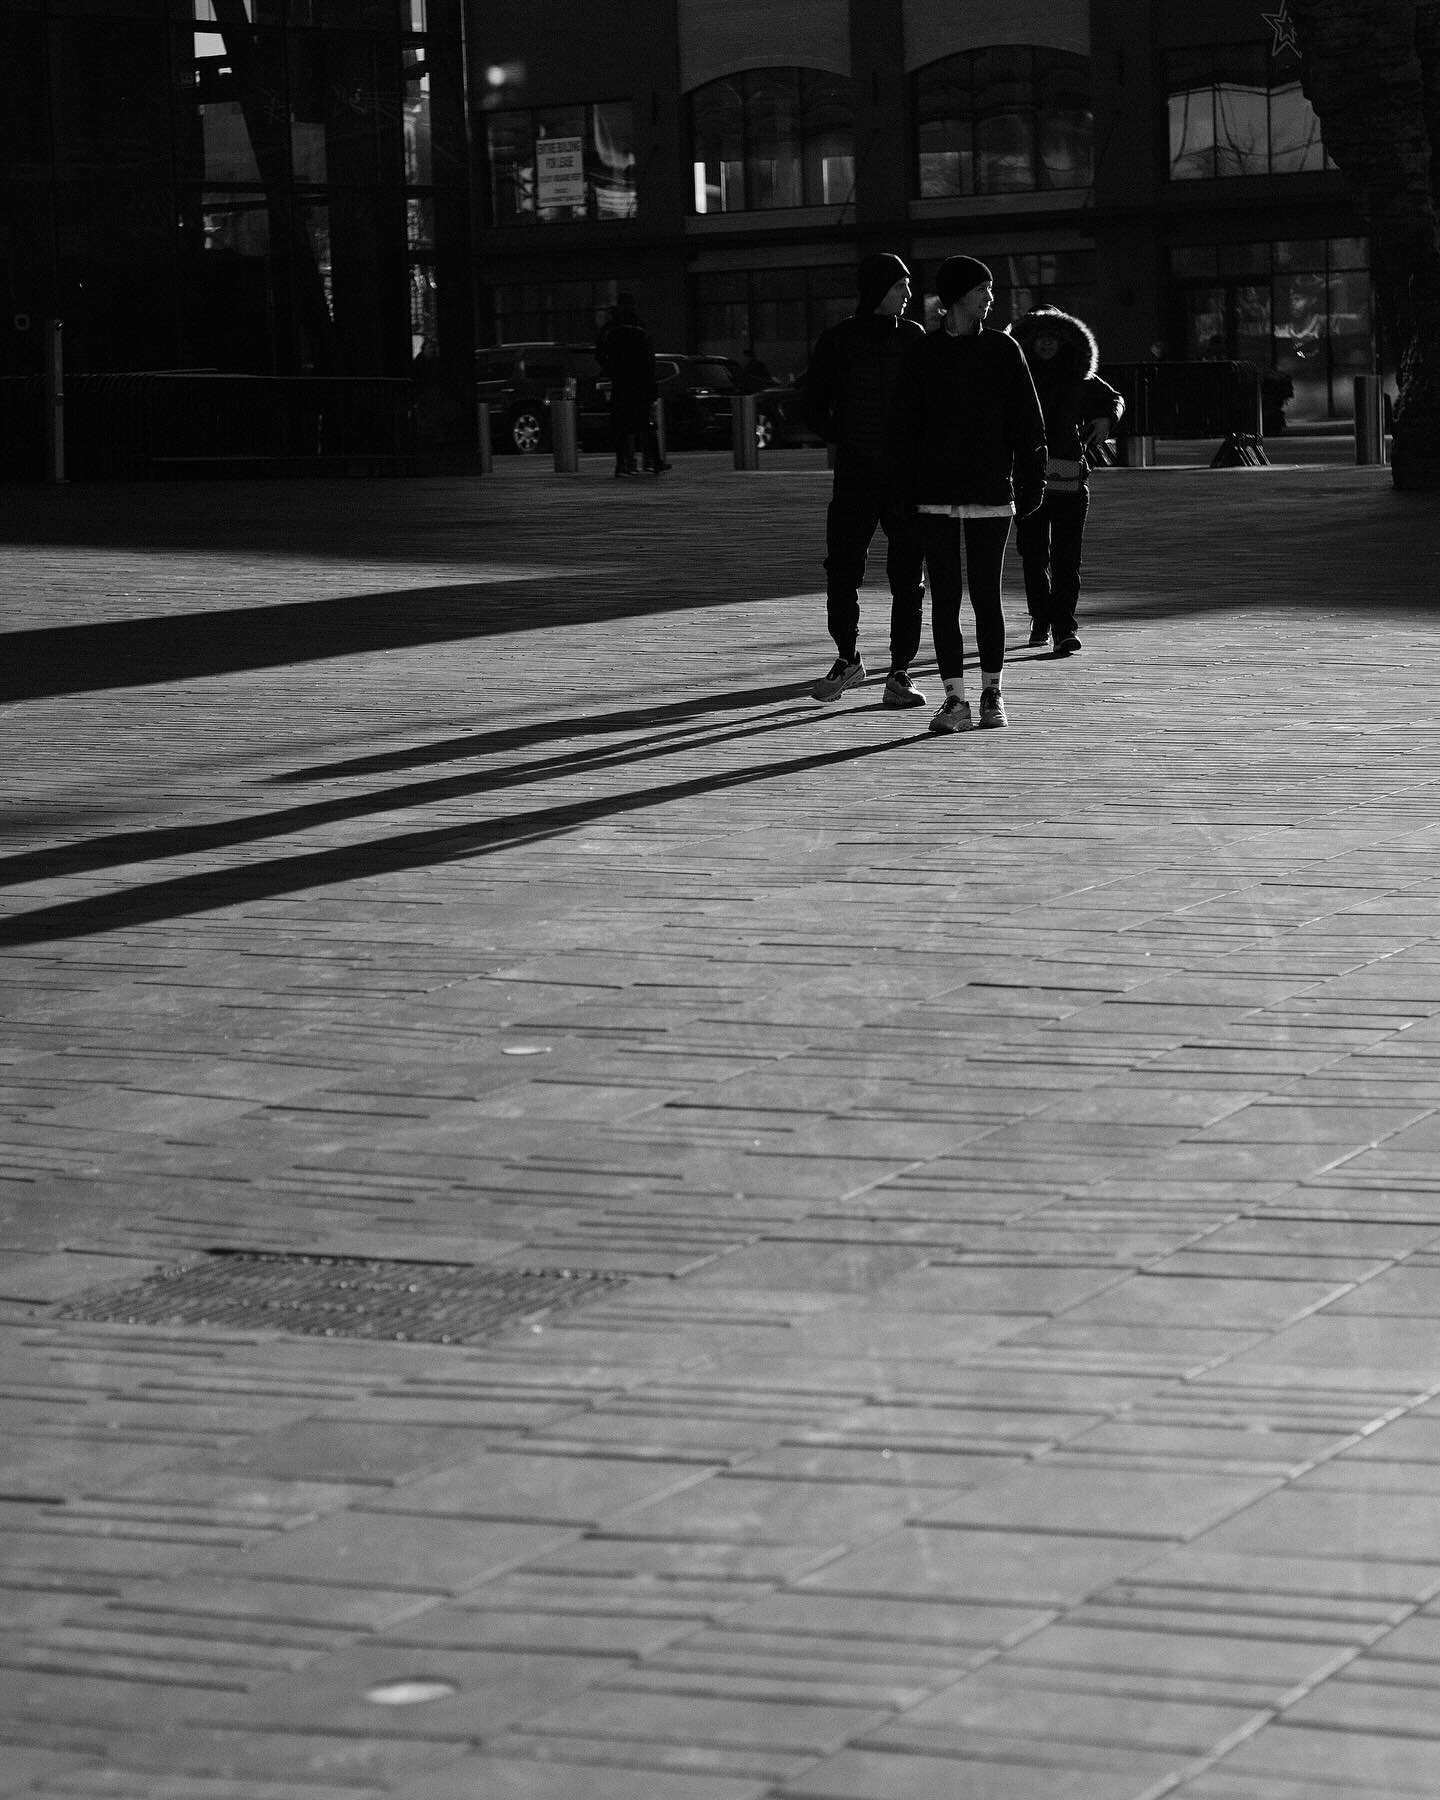 Love me some long shadows 👤👤👤

#photography #bnwphotography #monochrome #nyc #monochromephotography #bnw #blackandwhite #ny #newyork #brooklyn #streetphotography #fuji #xe4 #fujixe4 #manhattan #fujifilm_xseries #shadows #silhouette #fujifilmphotog